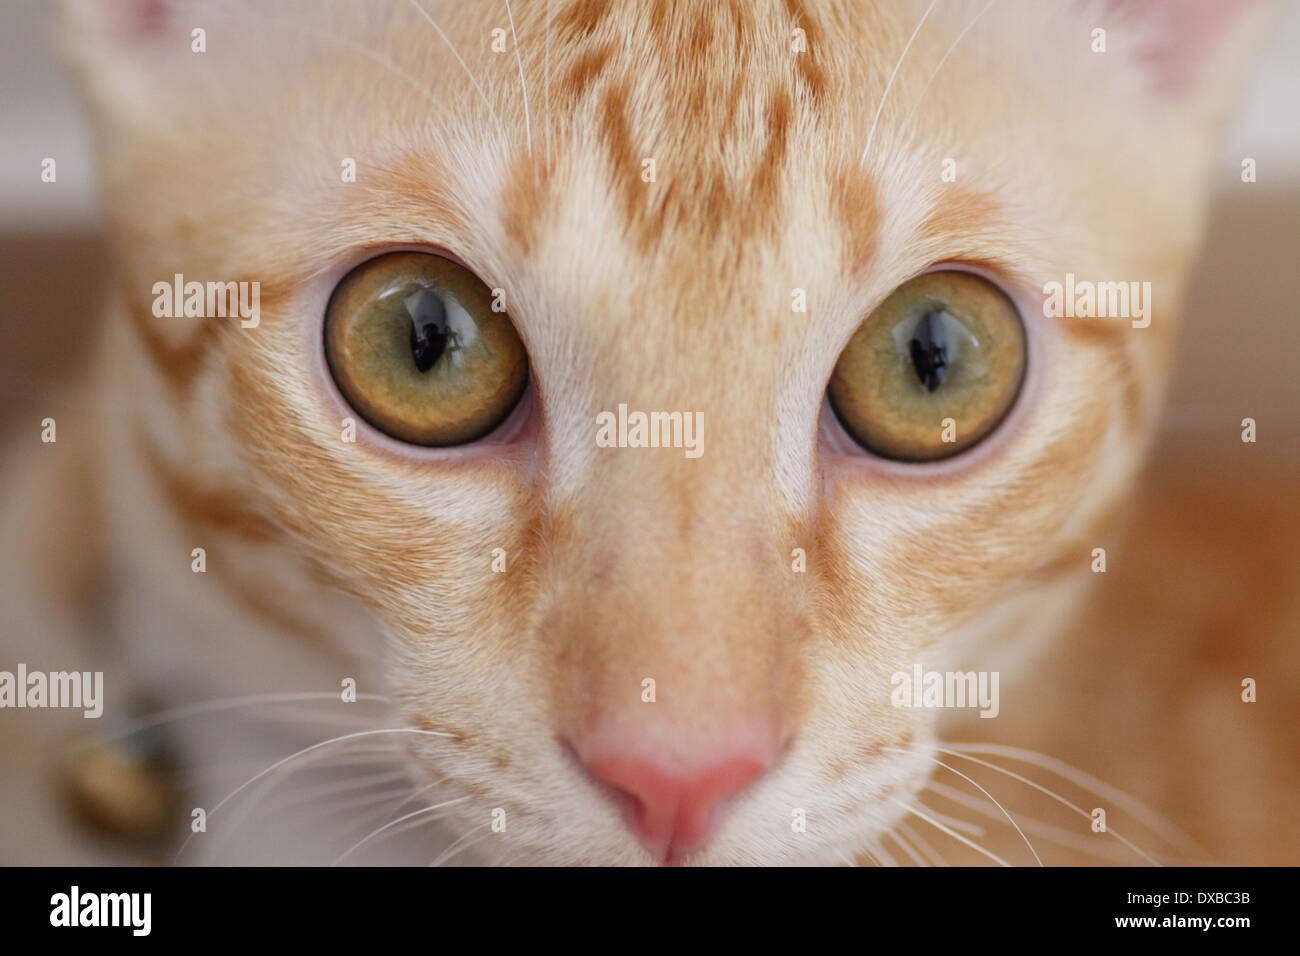 Close-up of a cat's face Banque D'Images